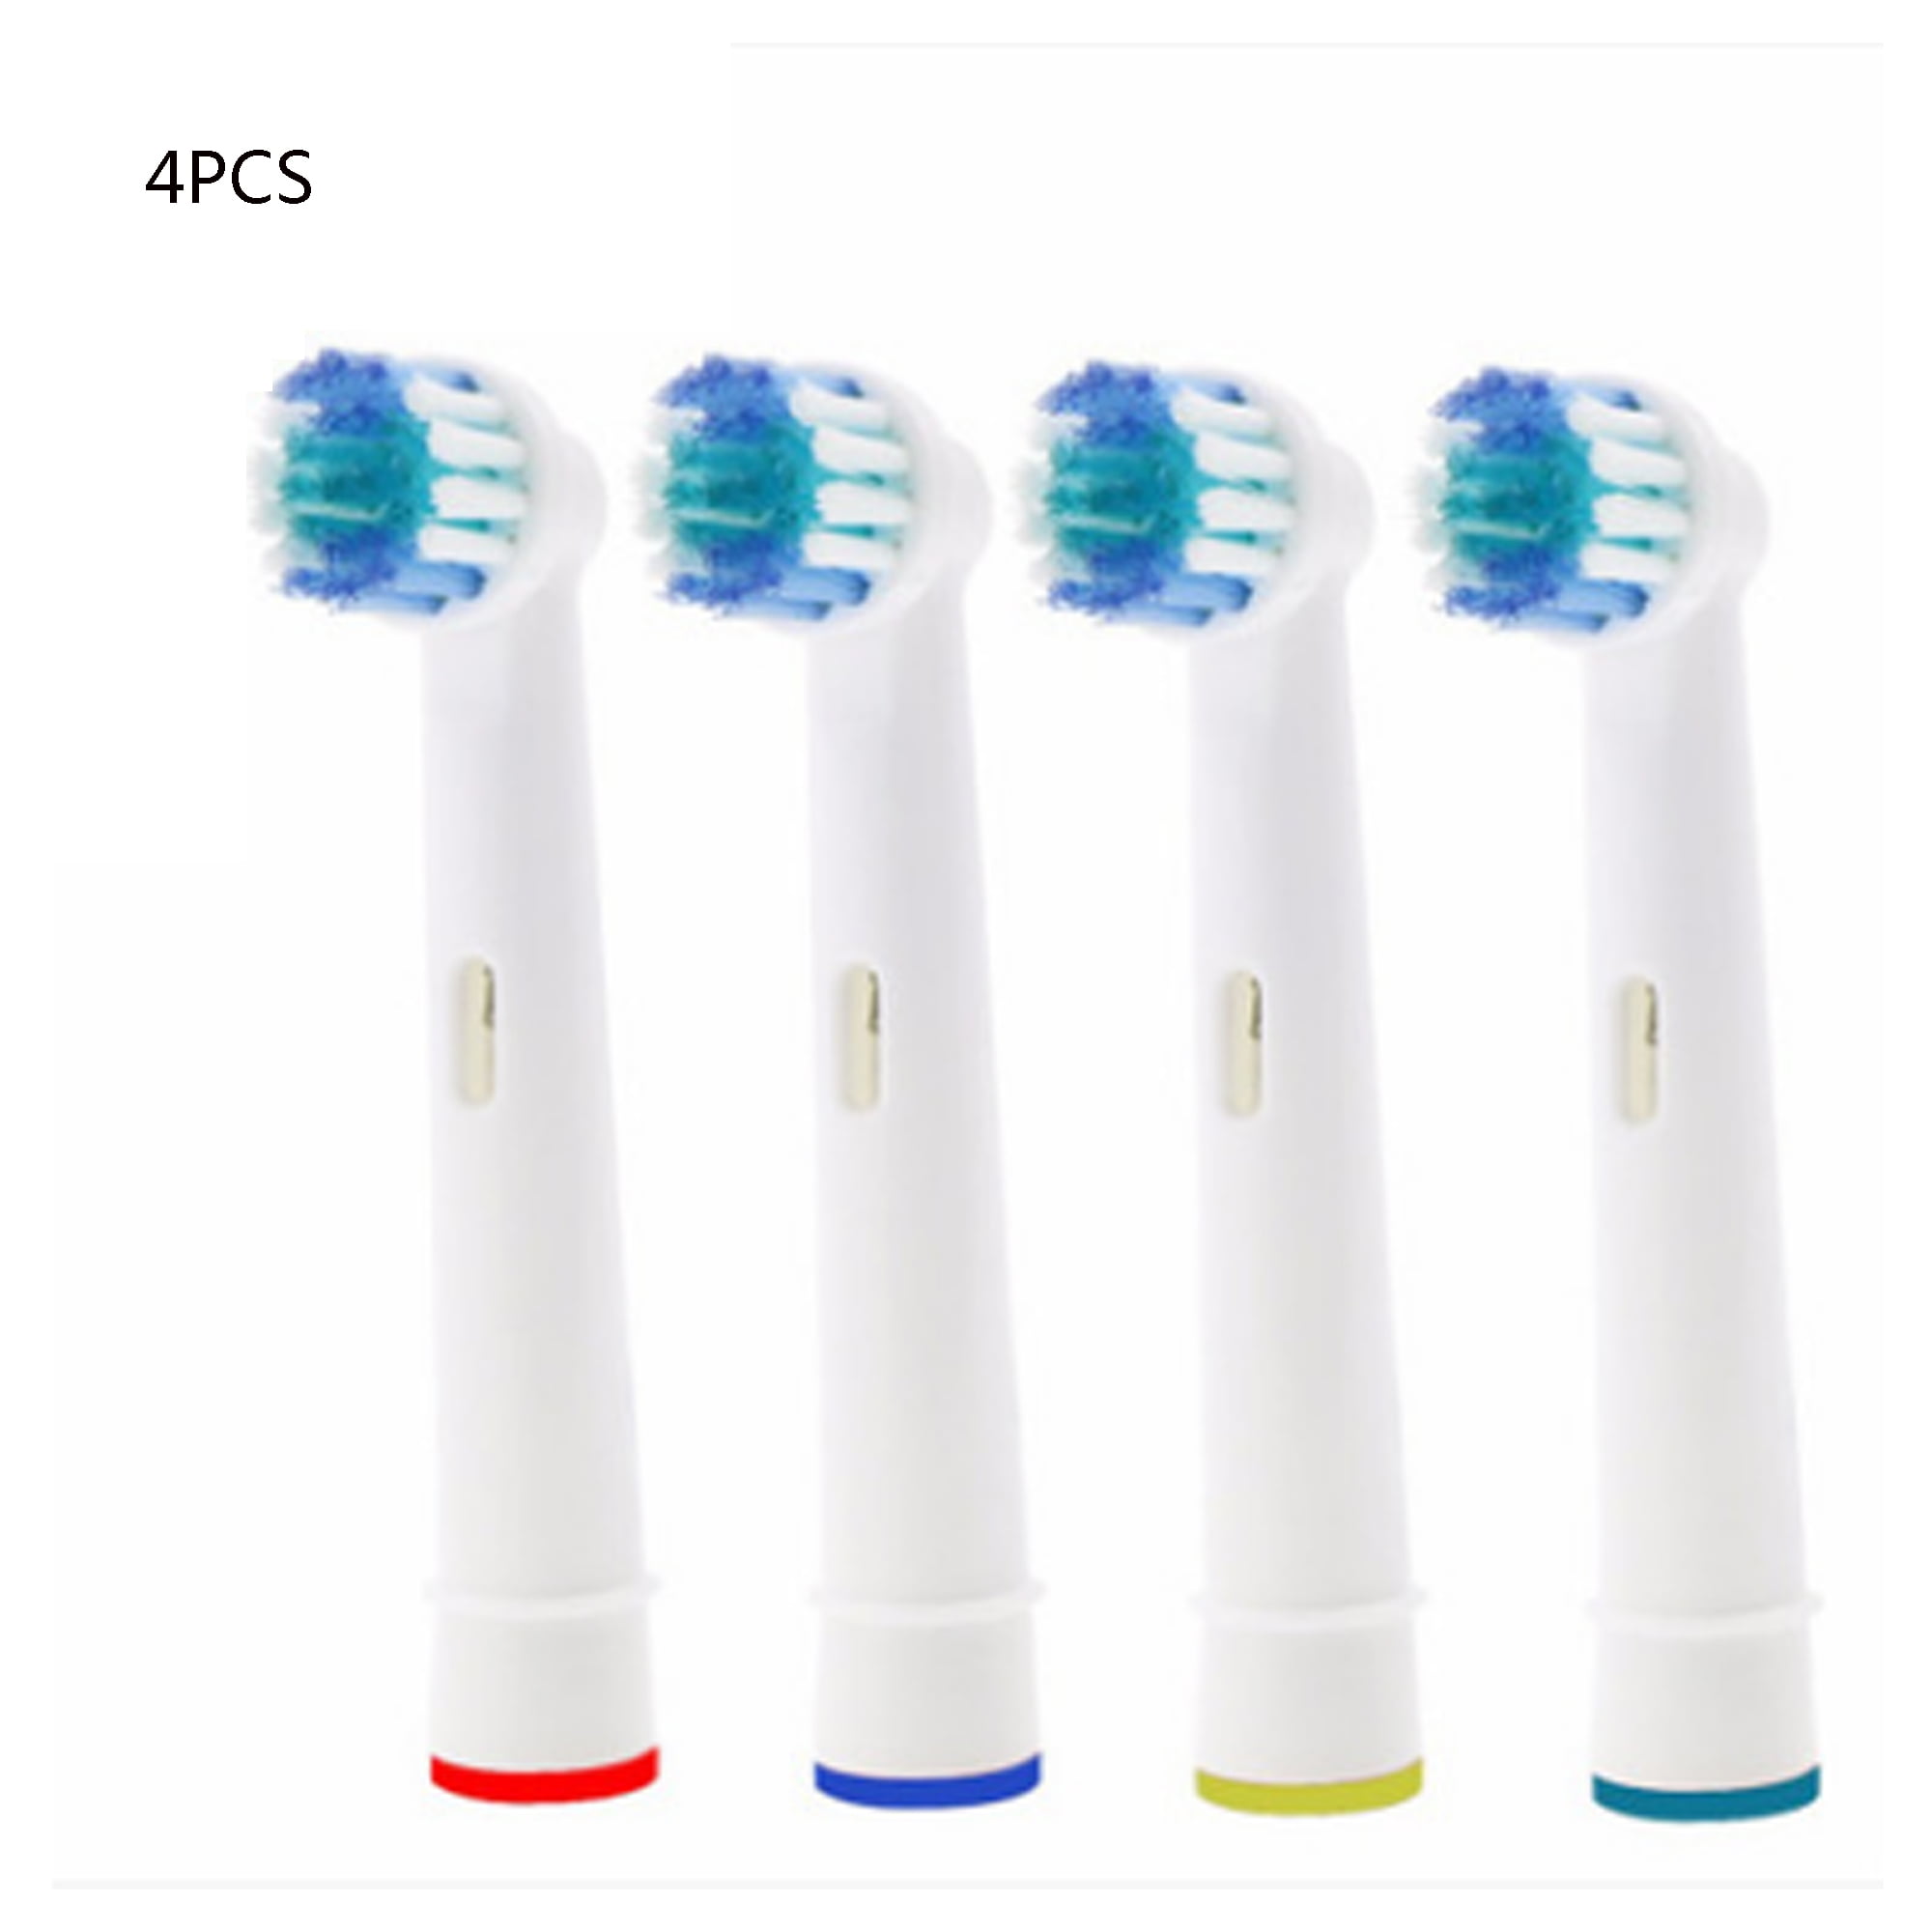 AmShibel 20pcs/4pcs Replacement Toothbrush Heads Brush Fit Oral B Braun Models Power Triumph Precision Clean Dropshipping - Walmart.com